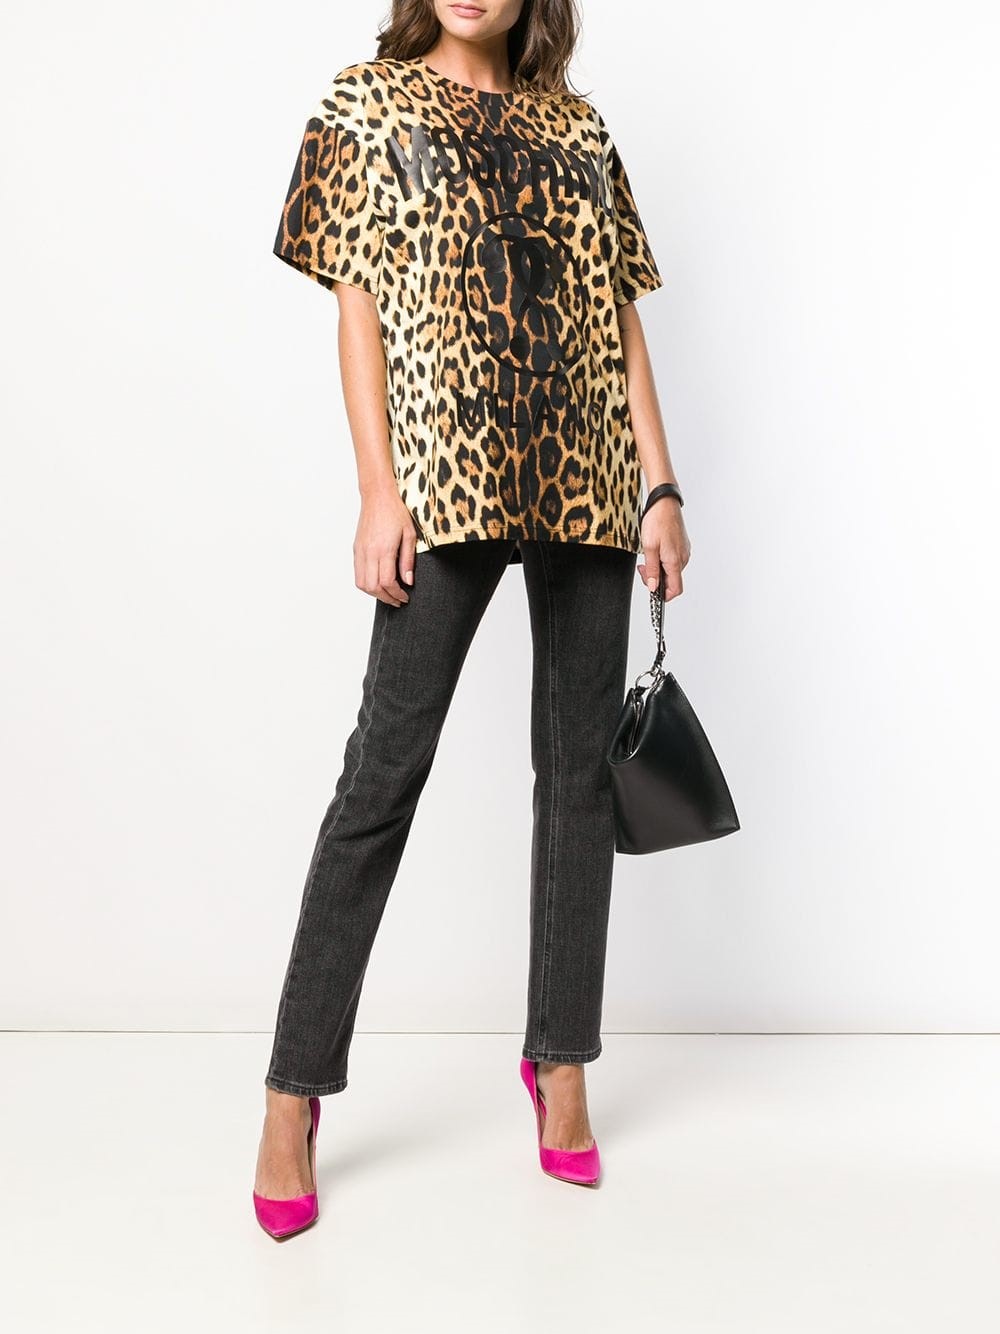 moschino leopard shirt